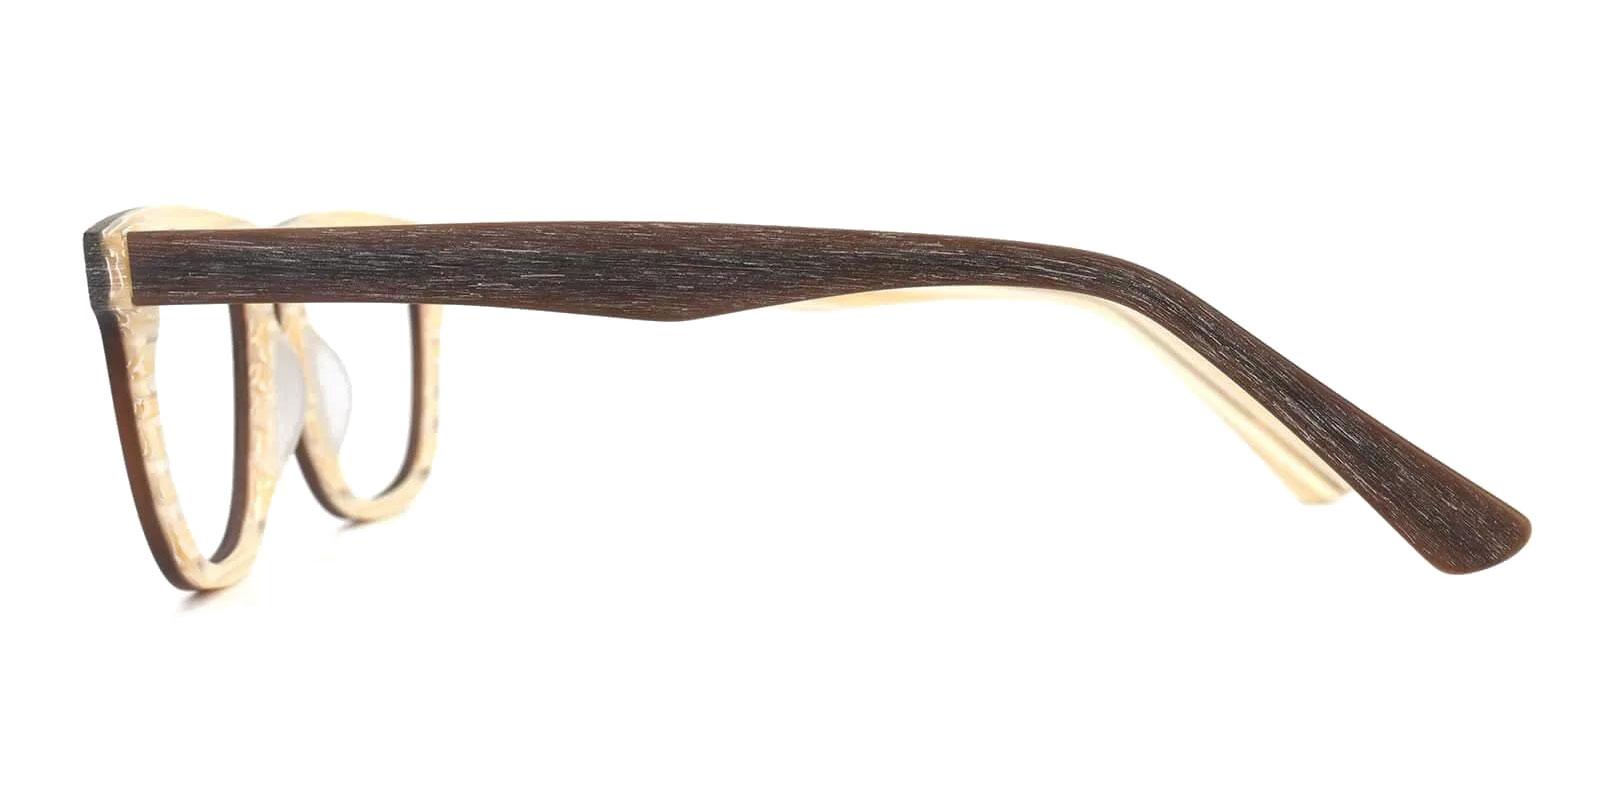 Readsboro Striped Acetate Eyeglasses , UniversalBridgeFit Frames from ABBE Glasses